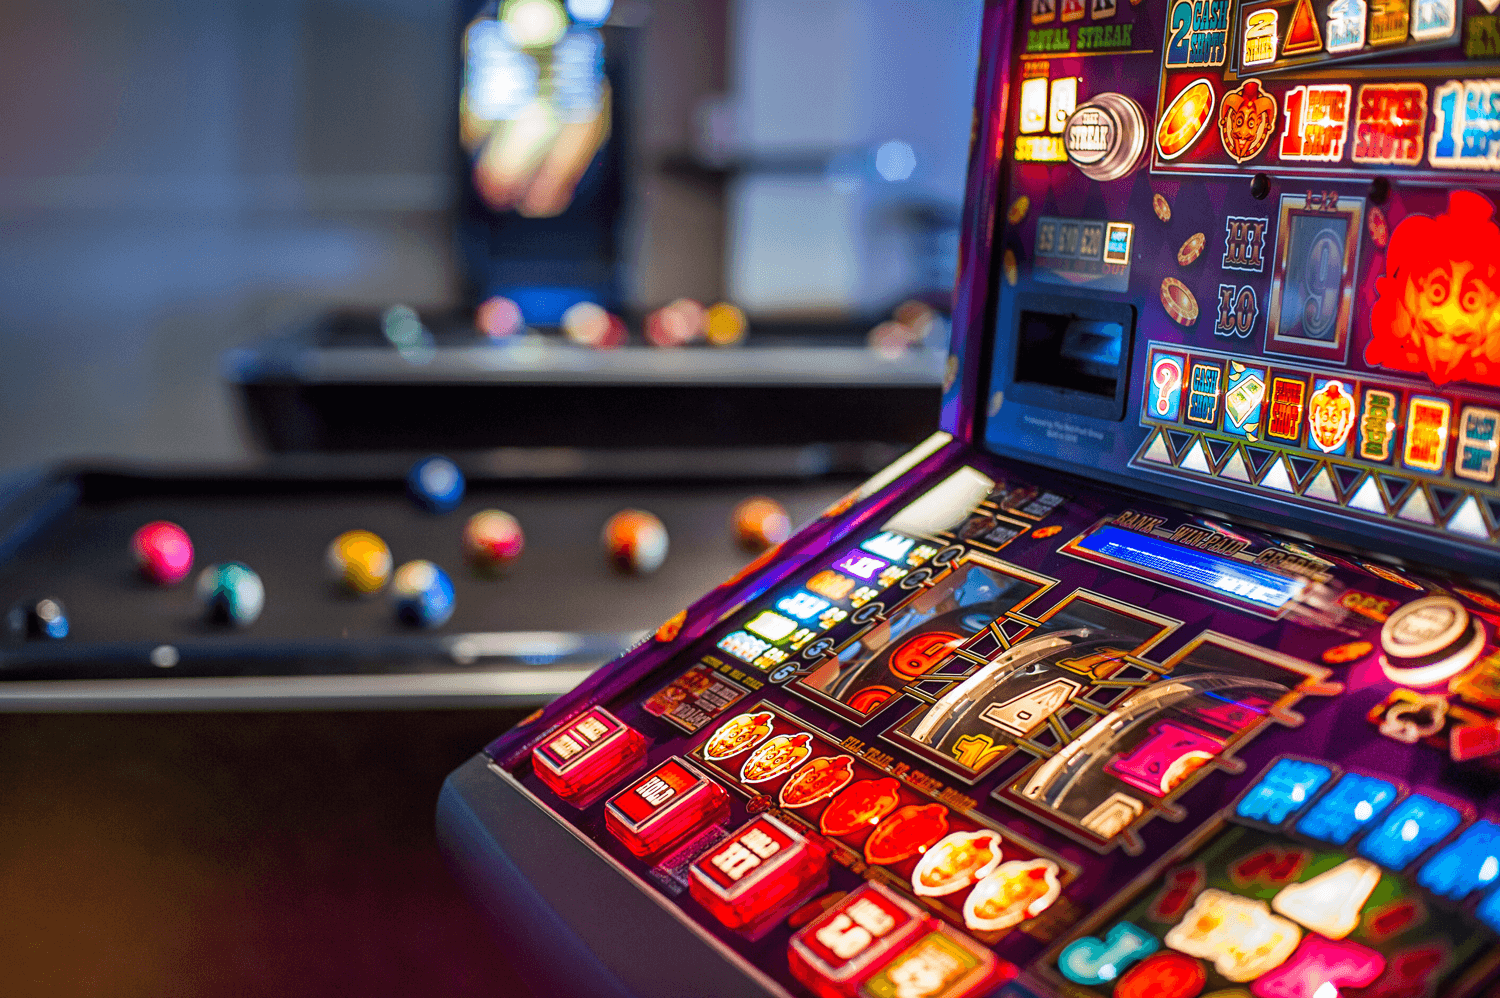 free casino slot machine games online